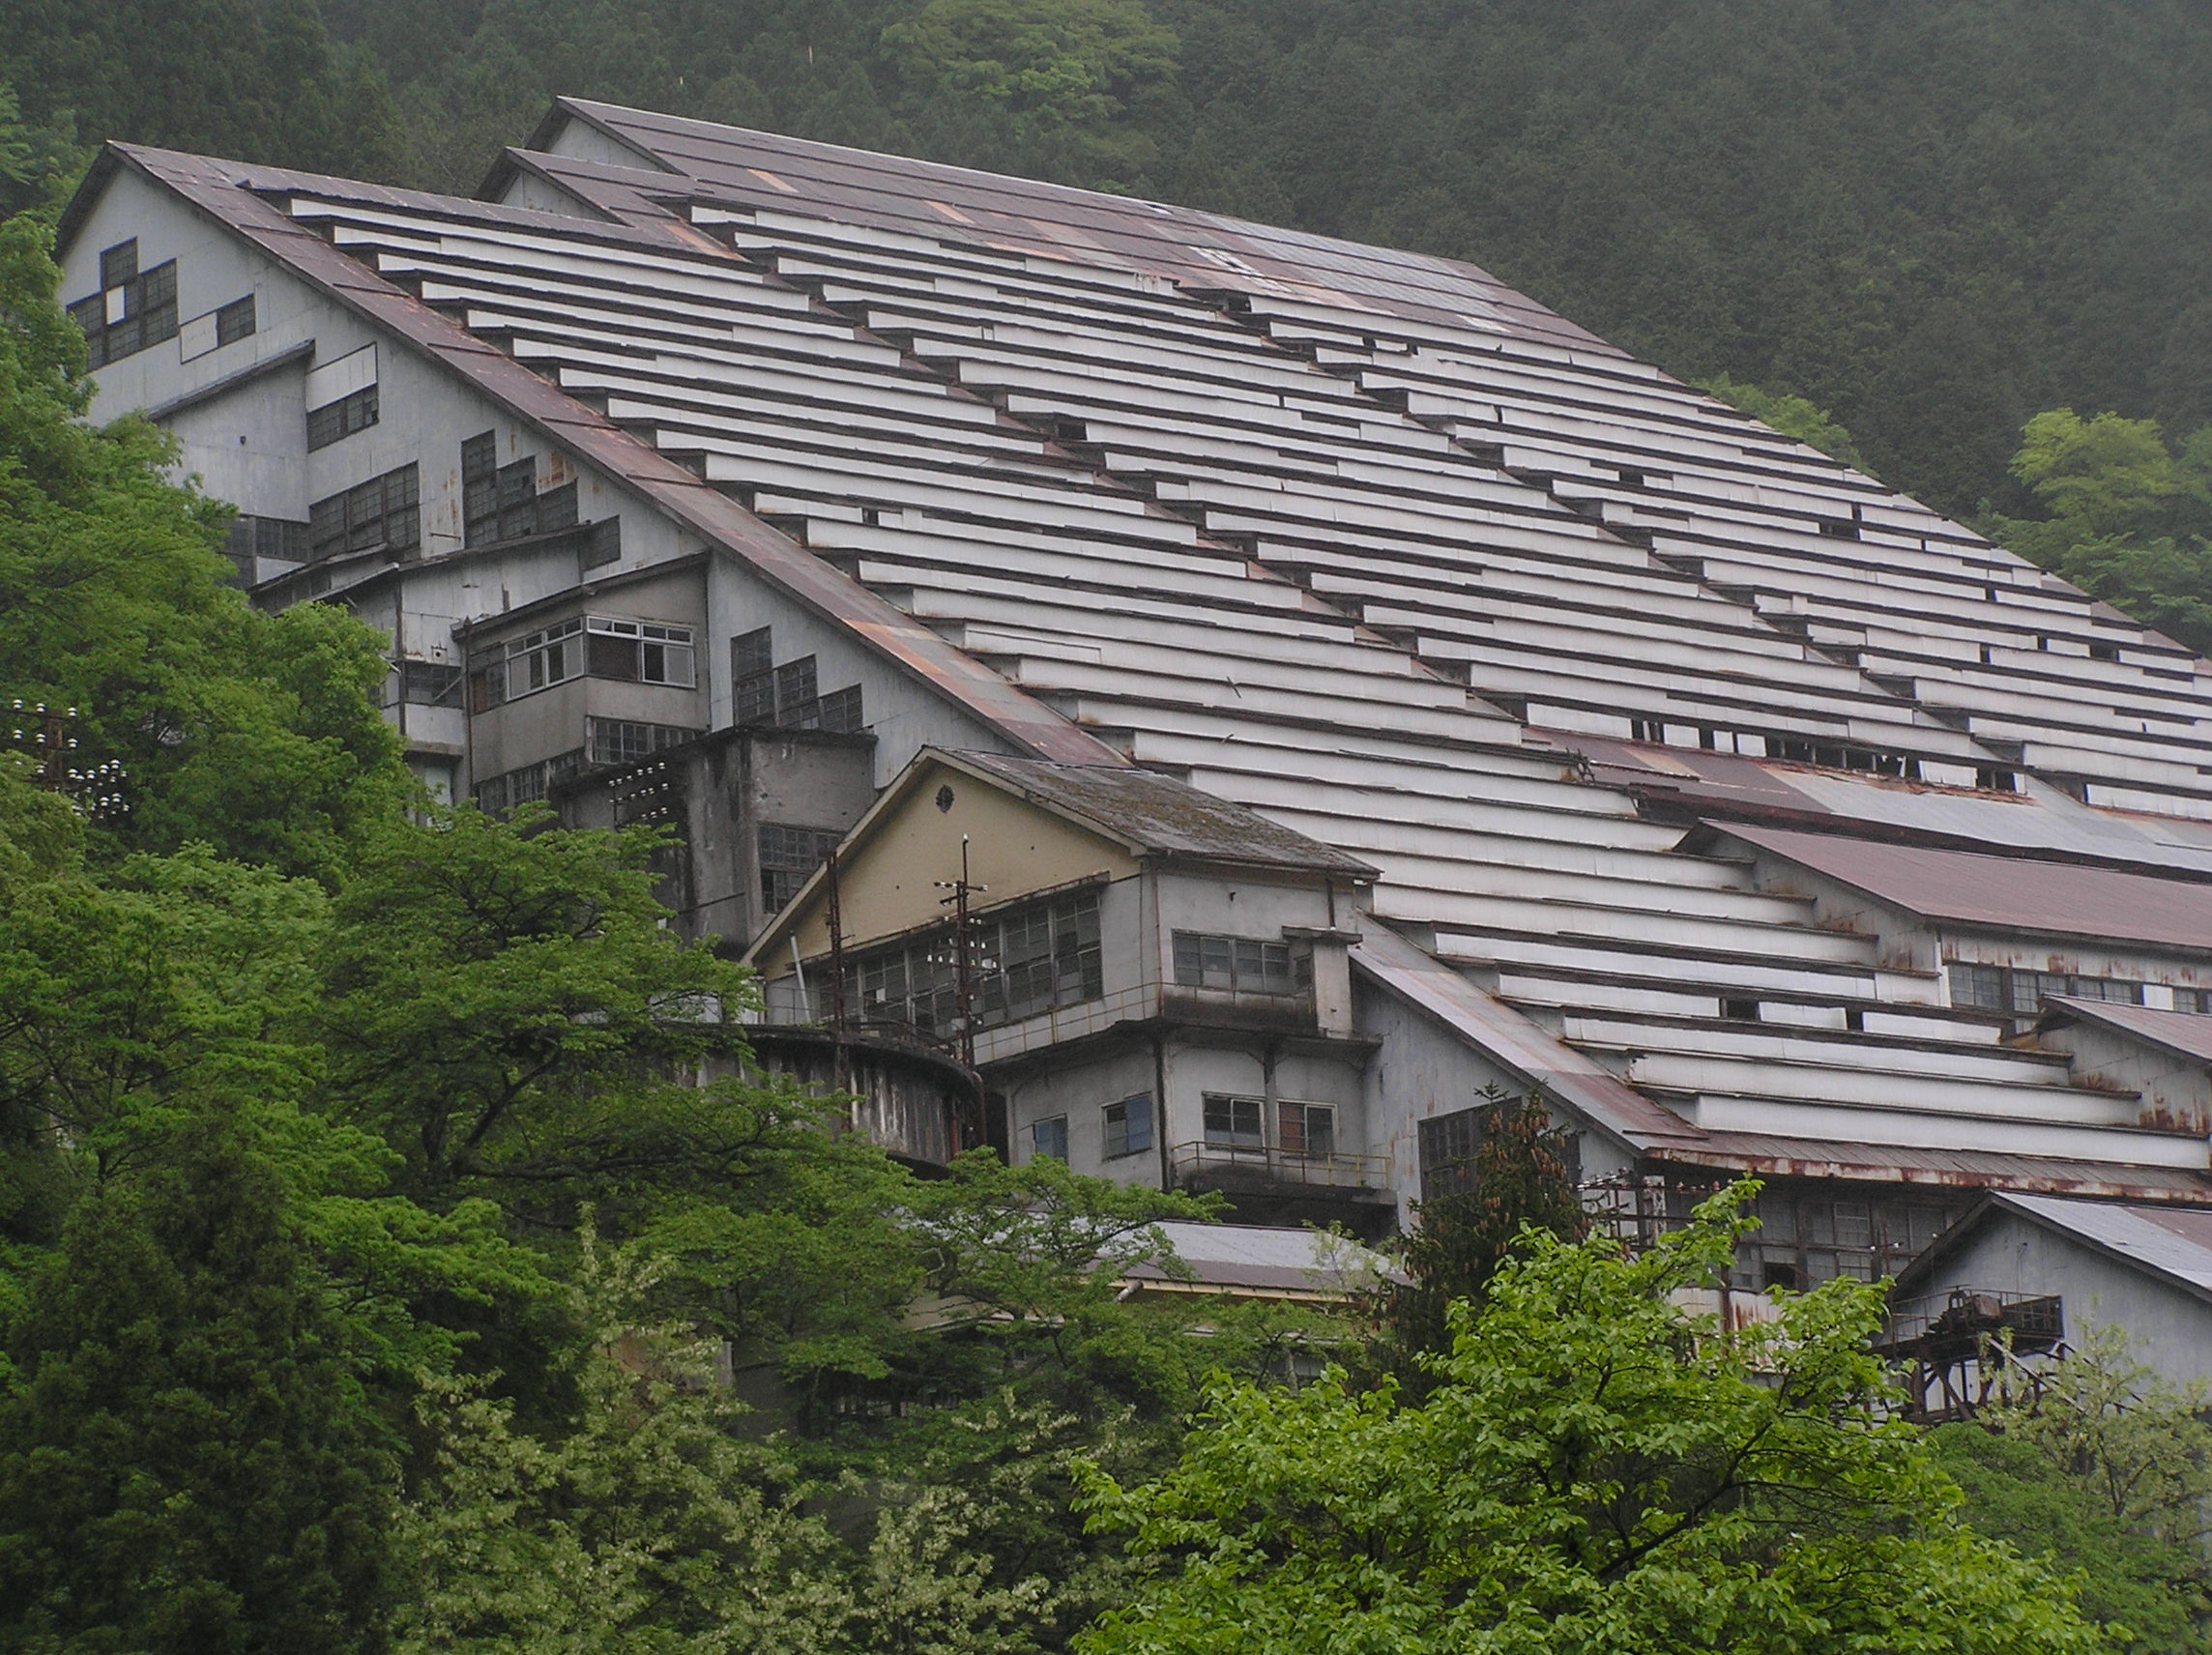 File:神子畑選鉱所,明延鉱業 全景038.jpg - Wikimedia Commons